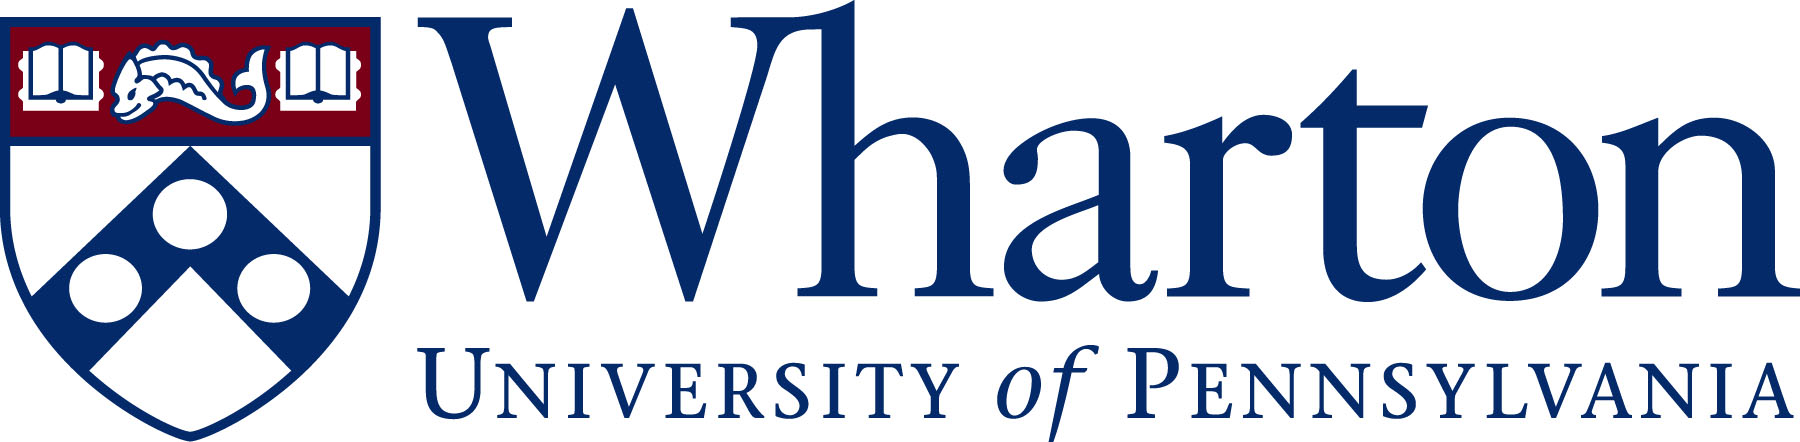 Wharton Logo photo - 1